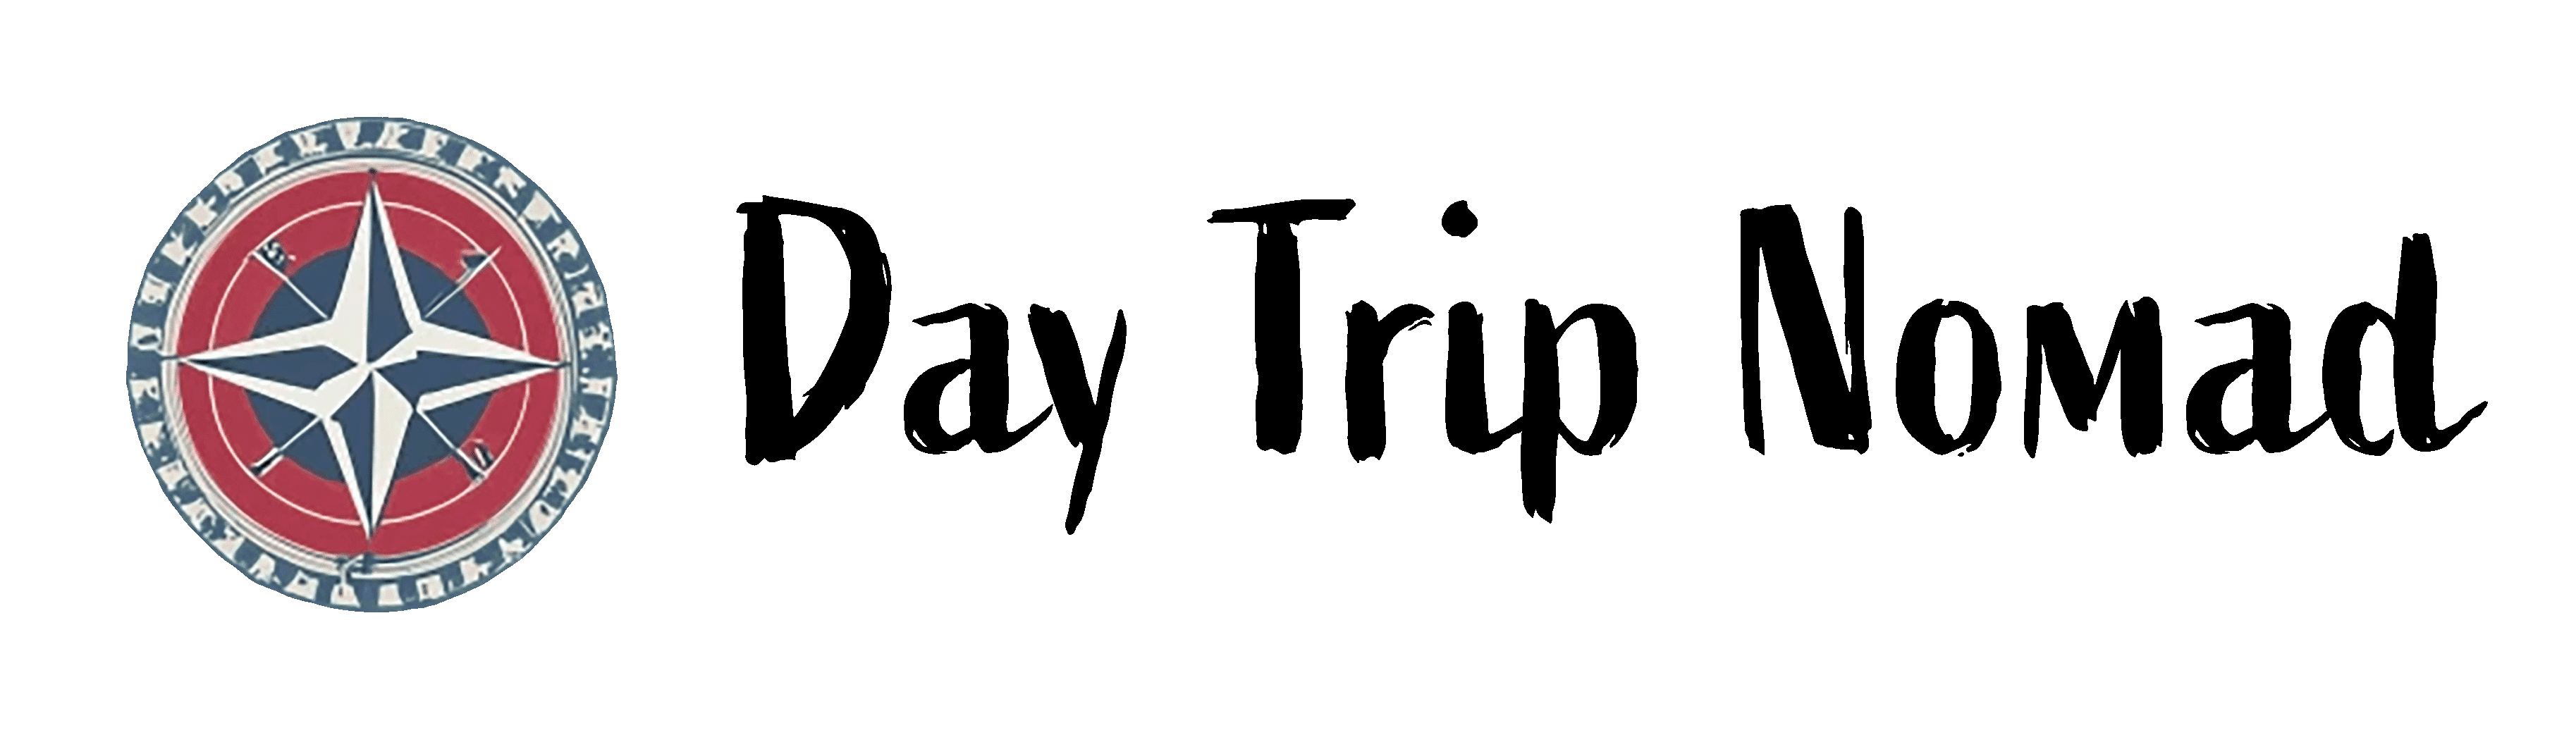 day trip nomad large horizontal logo